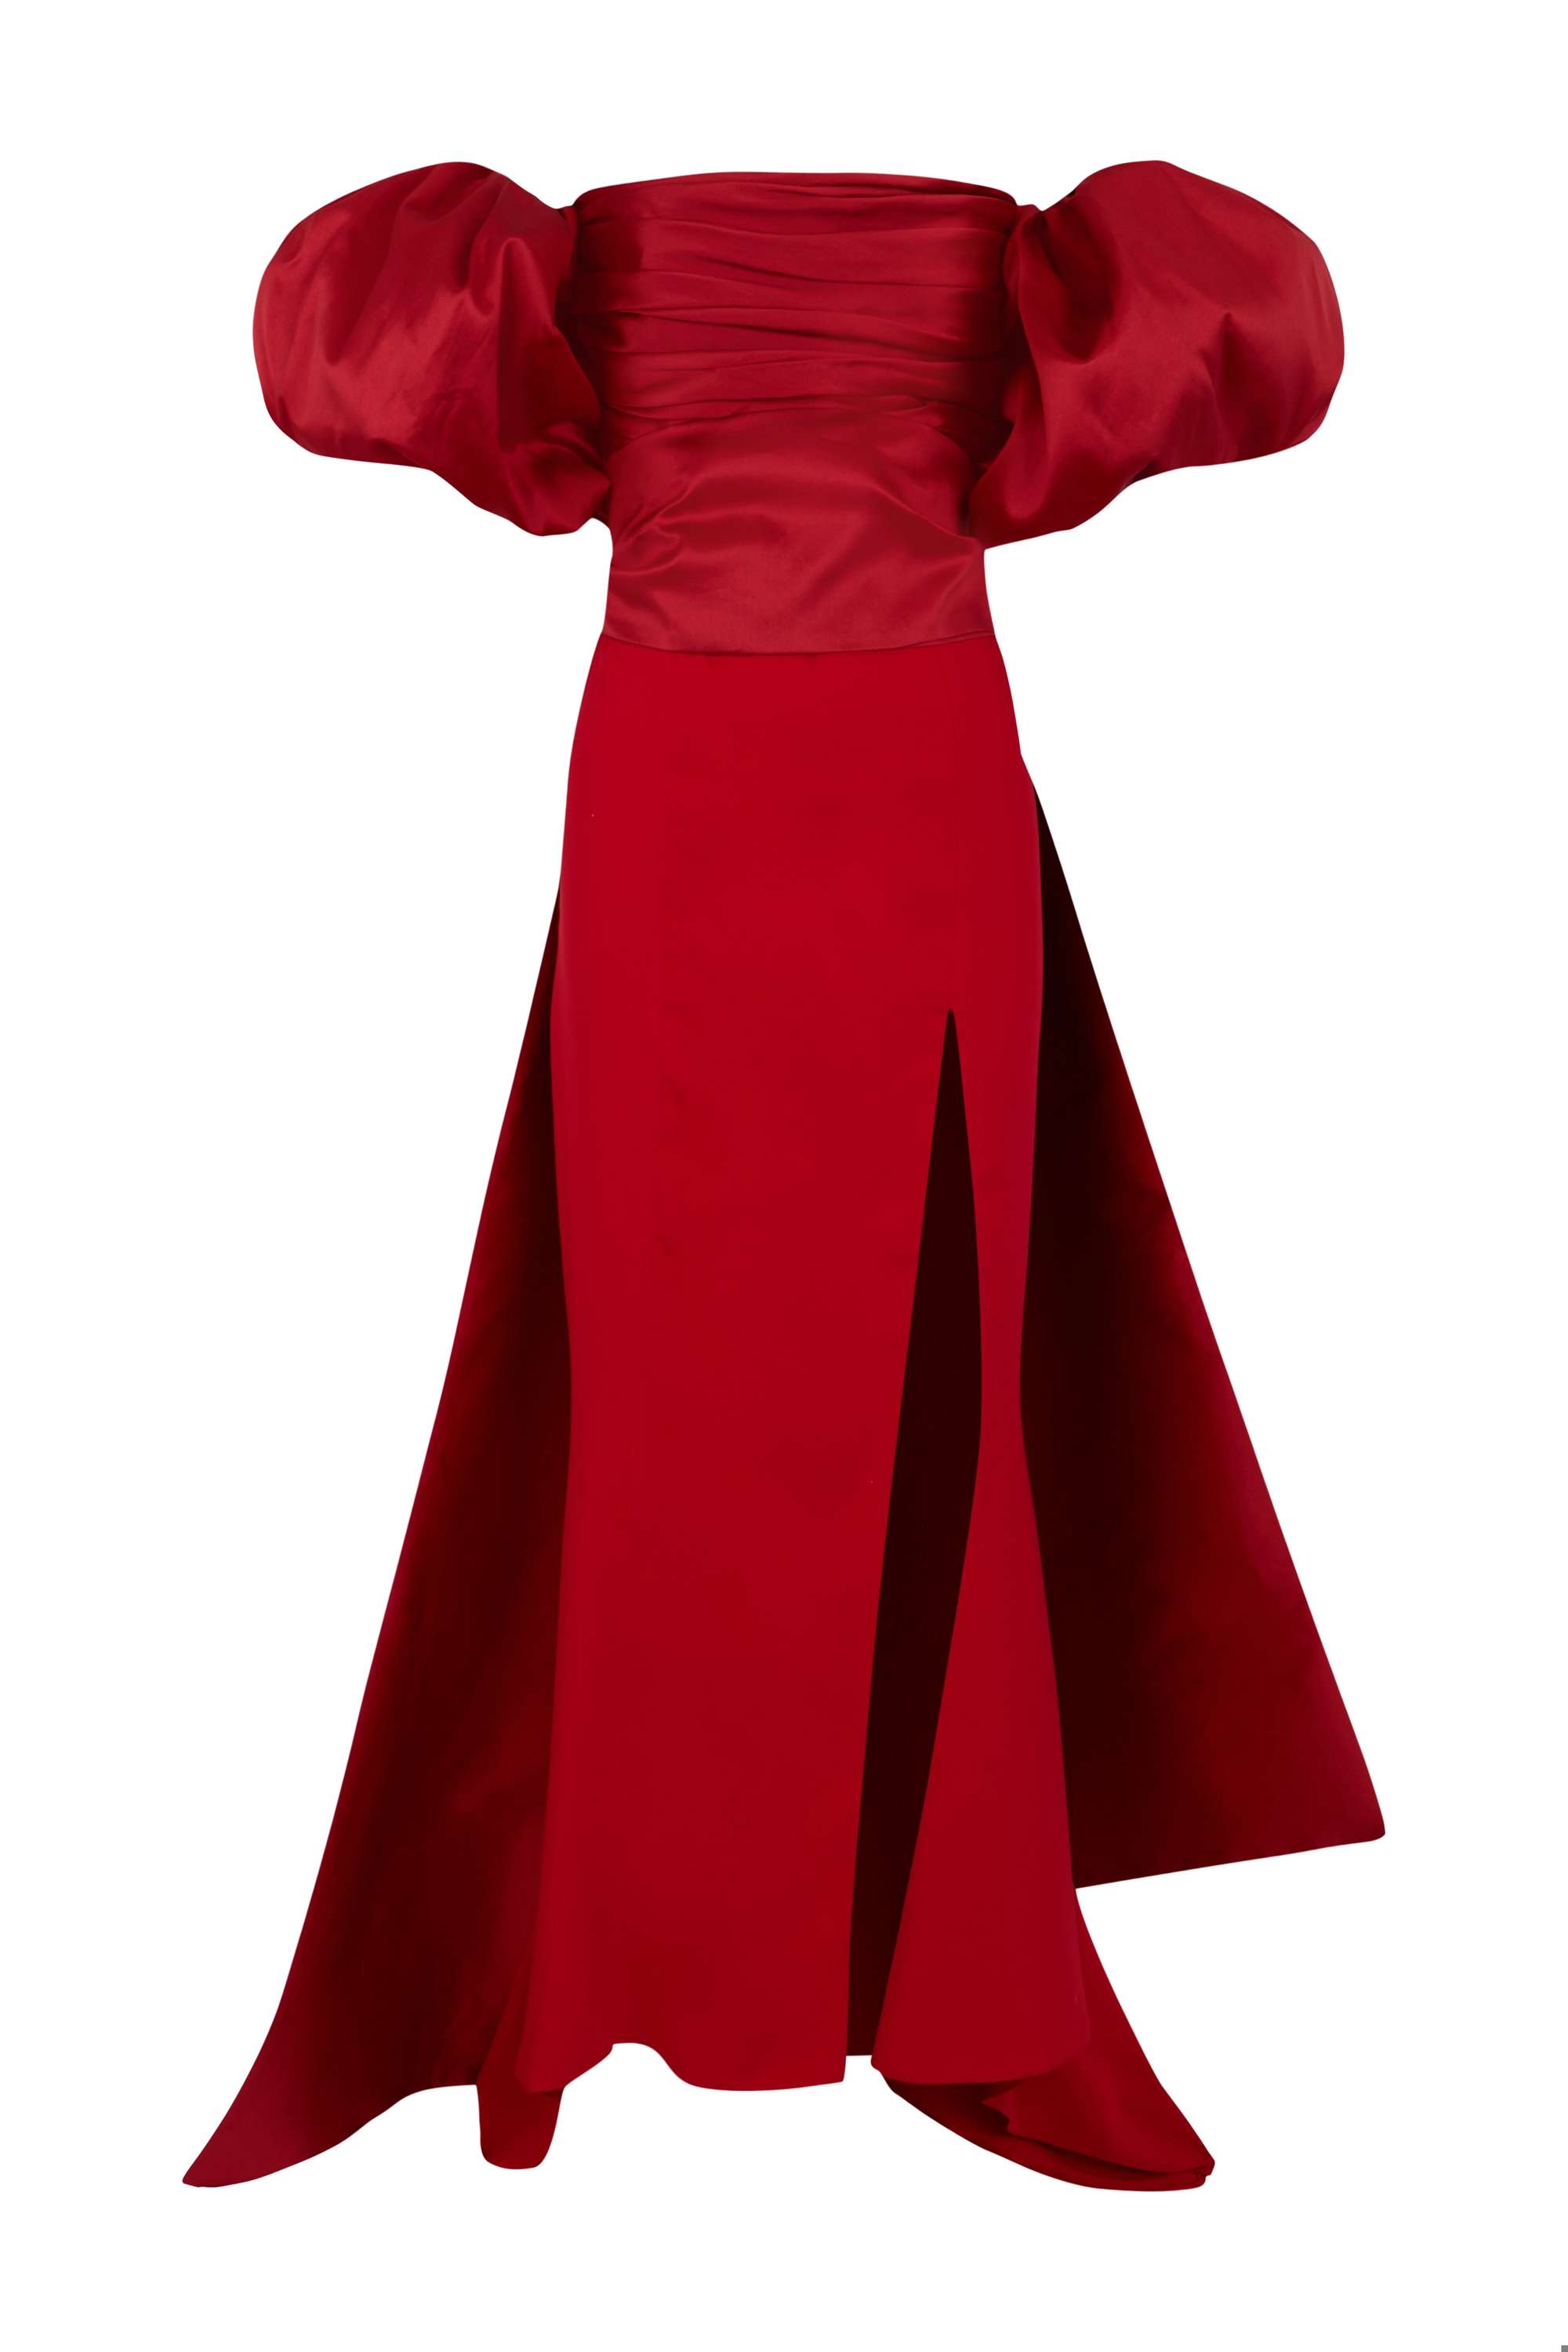 Vestido rojo con mangas abullonadas